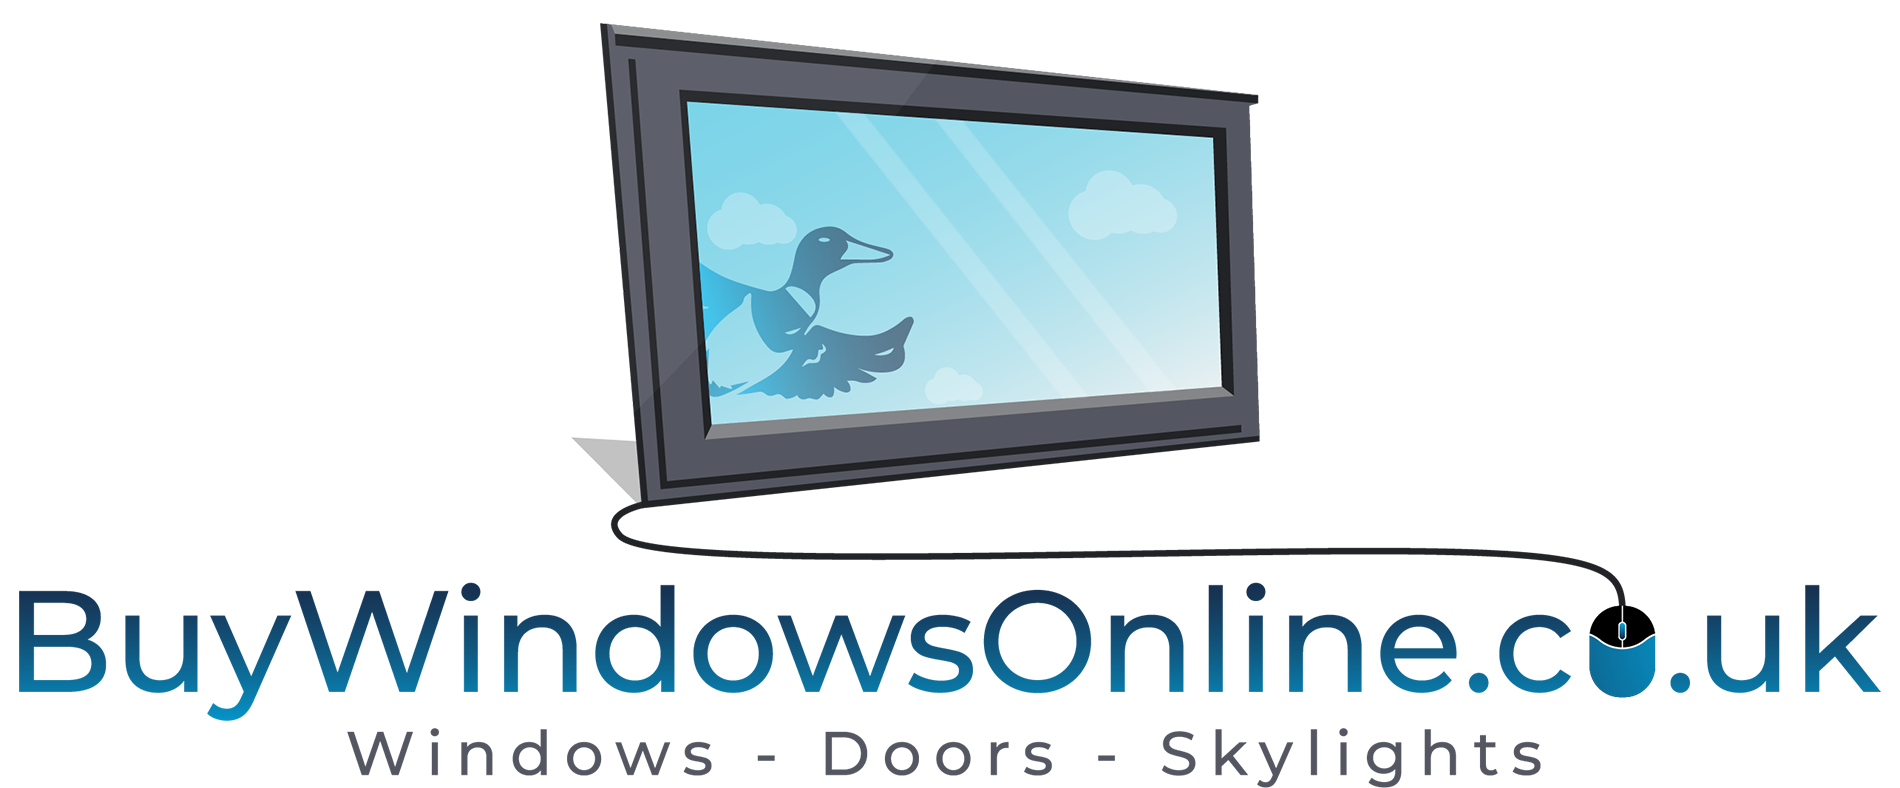 Load video: Buy Windows Online